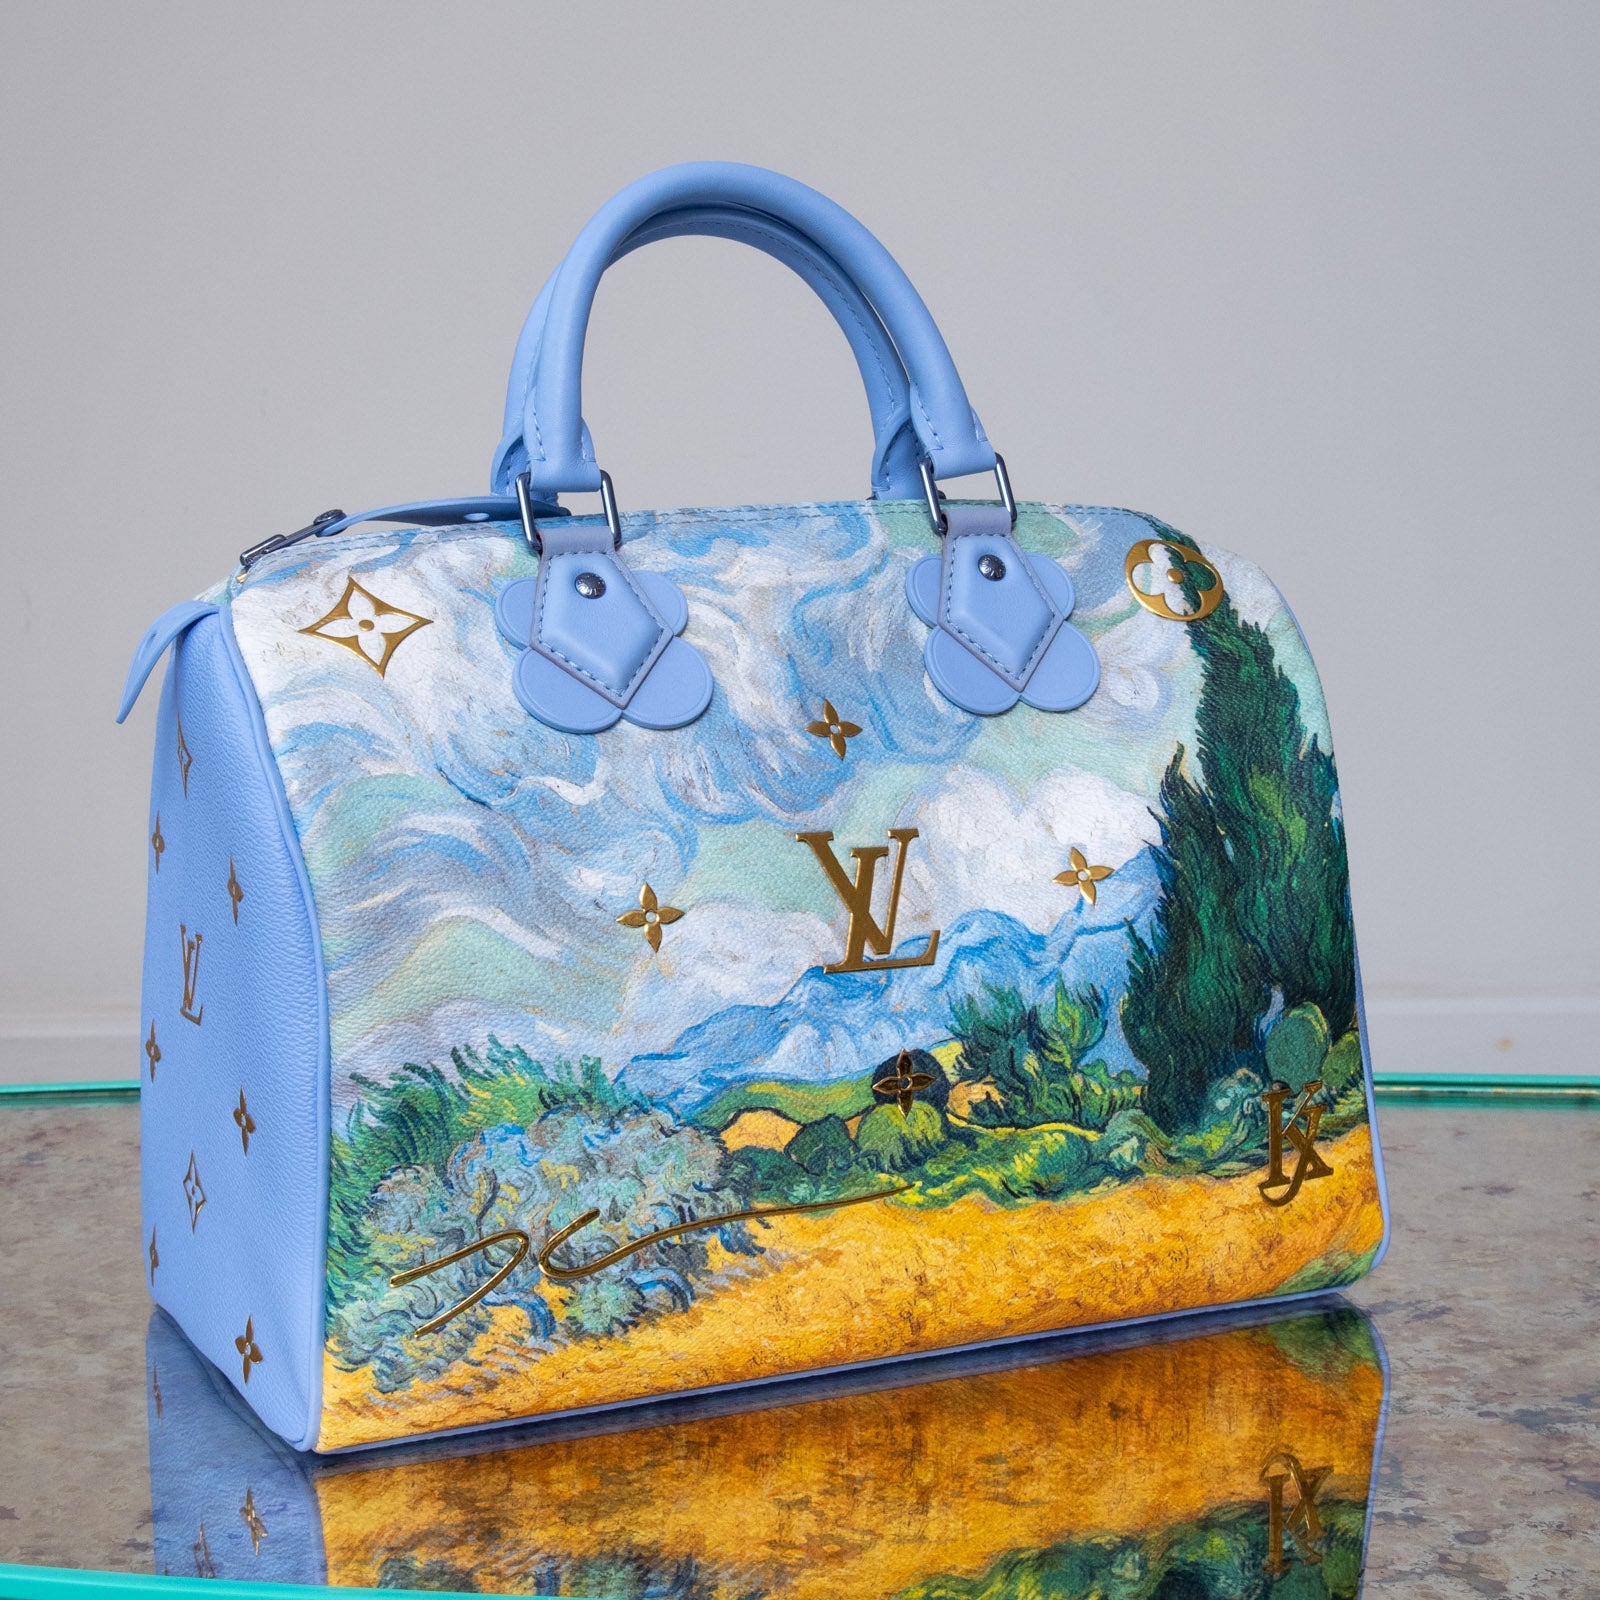 Louis Vuitton Ltd. Ed. jeff Koons Masters Van Gogh Speedy in Blue